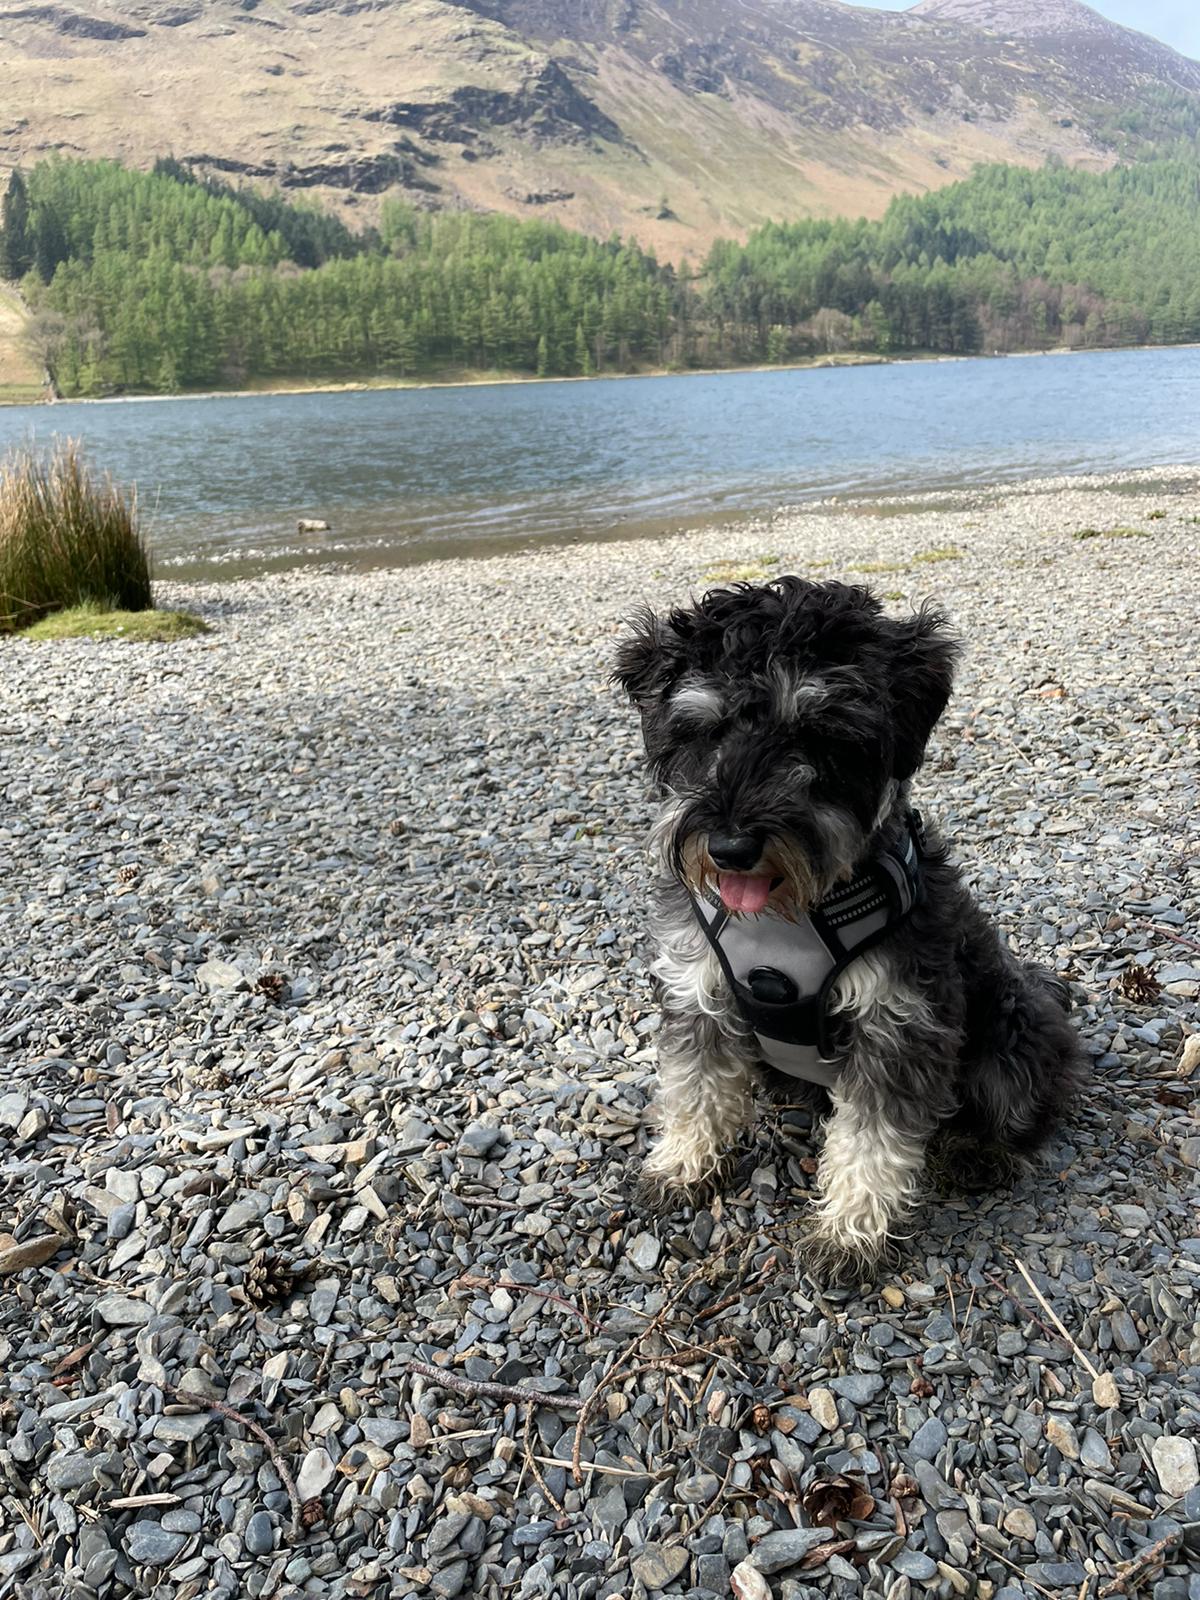 Teddy on the stony shore of a lake.